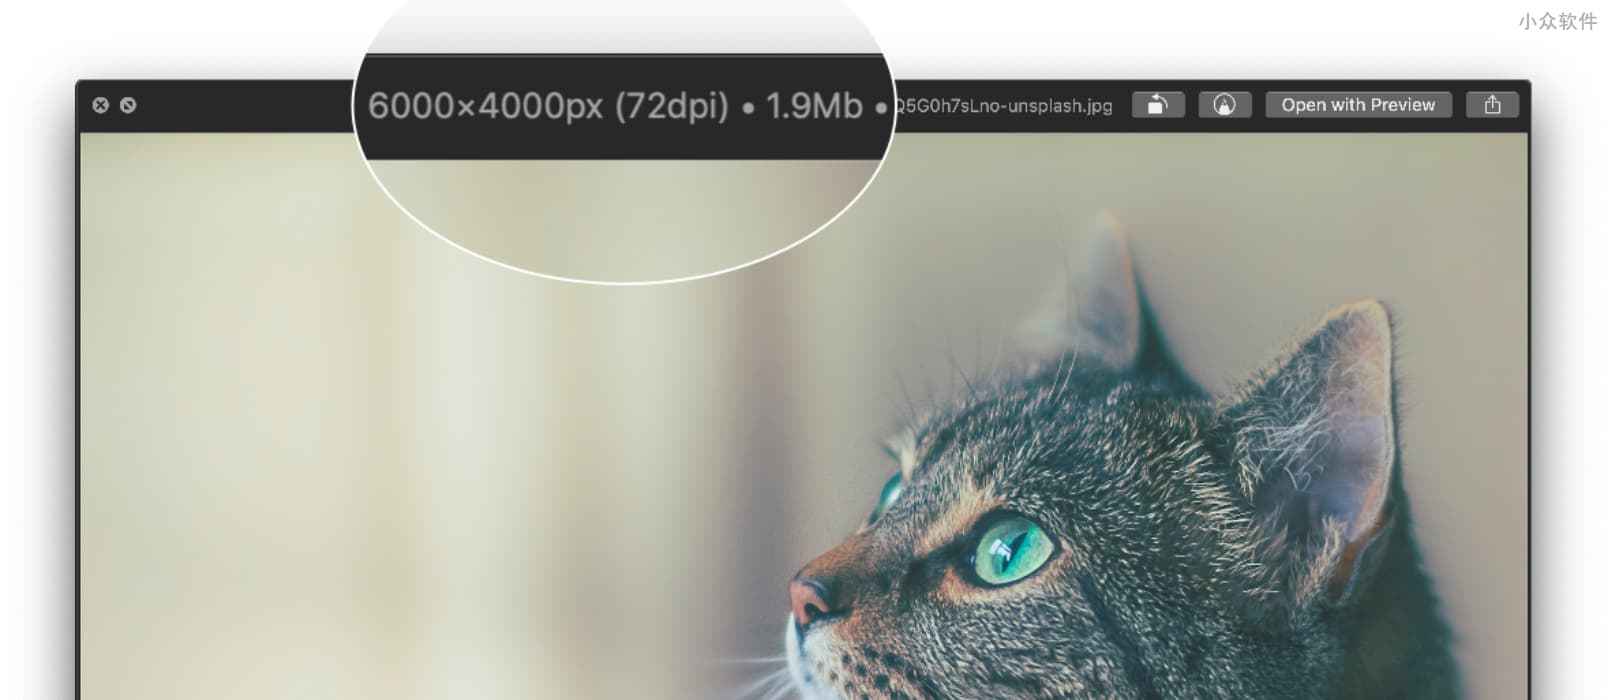 qlImageSize – 在 macOS 预览图片时显示图片尺寸大小